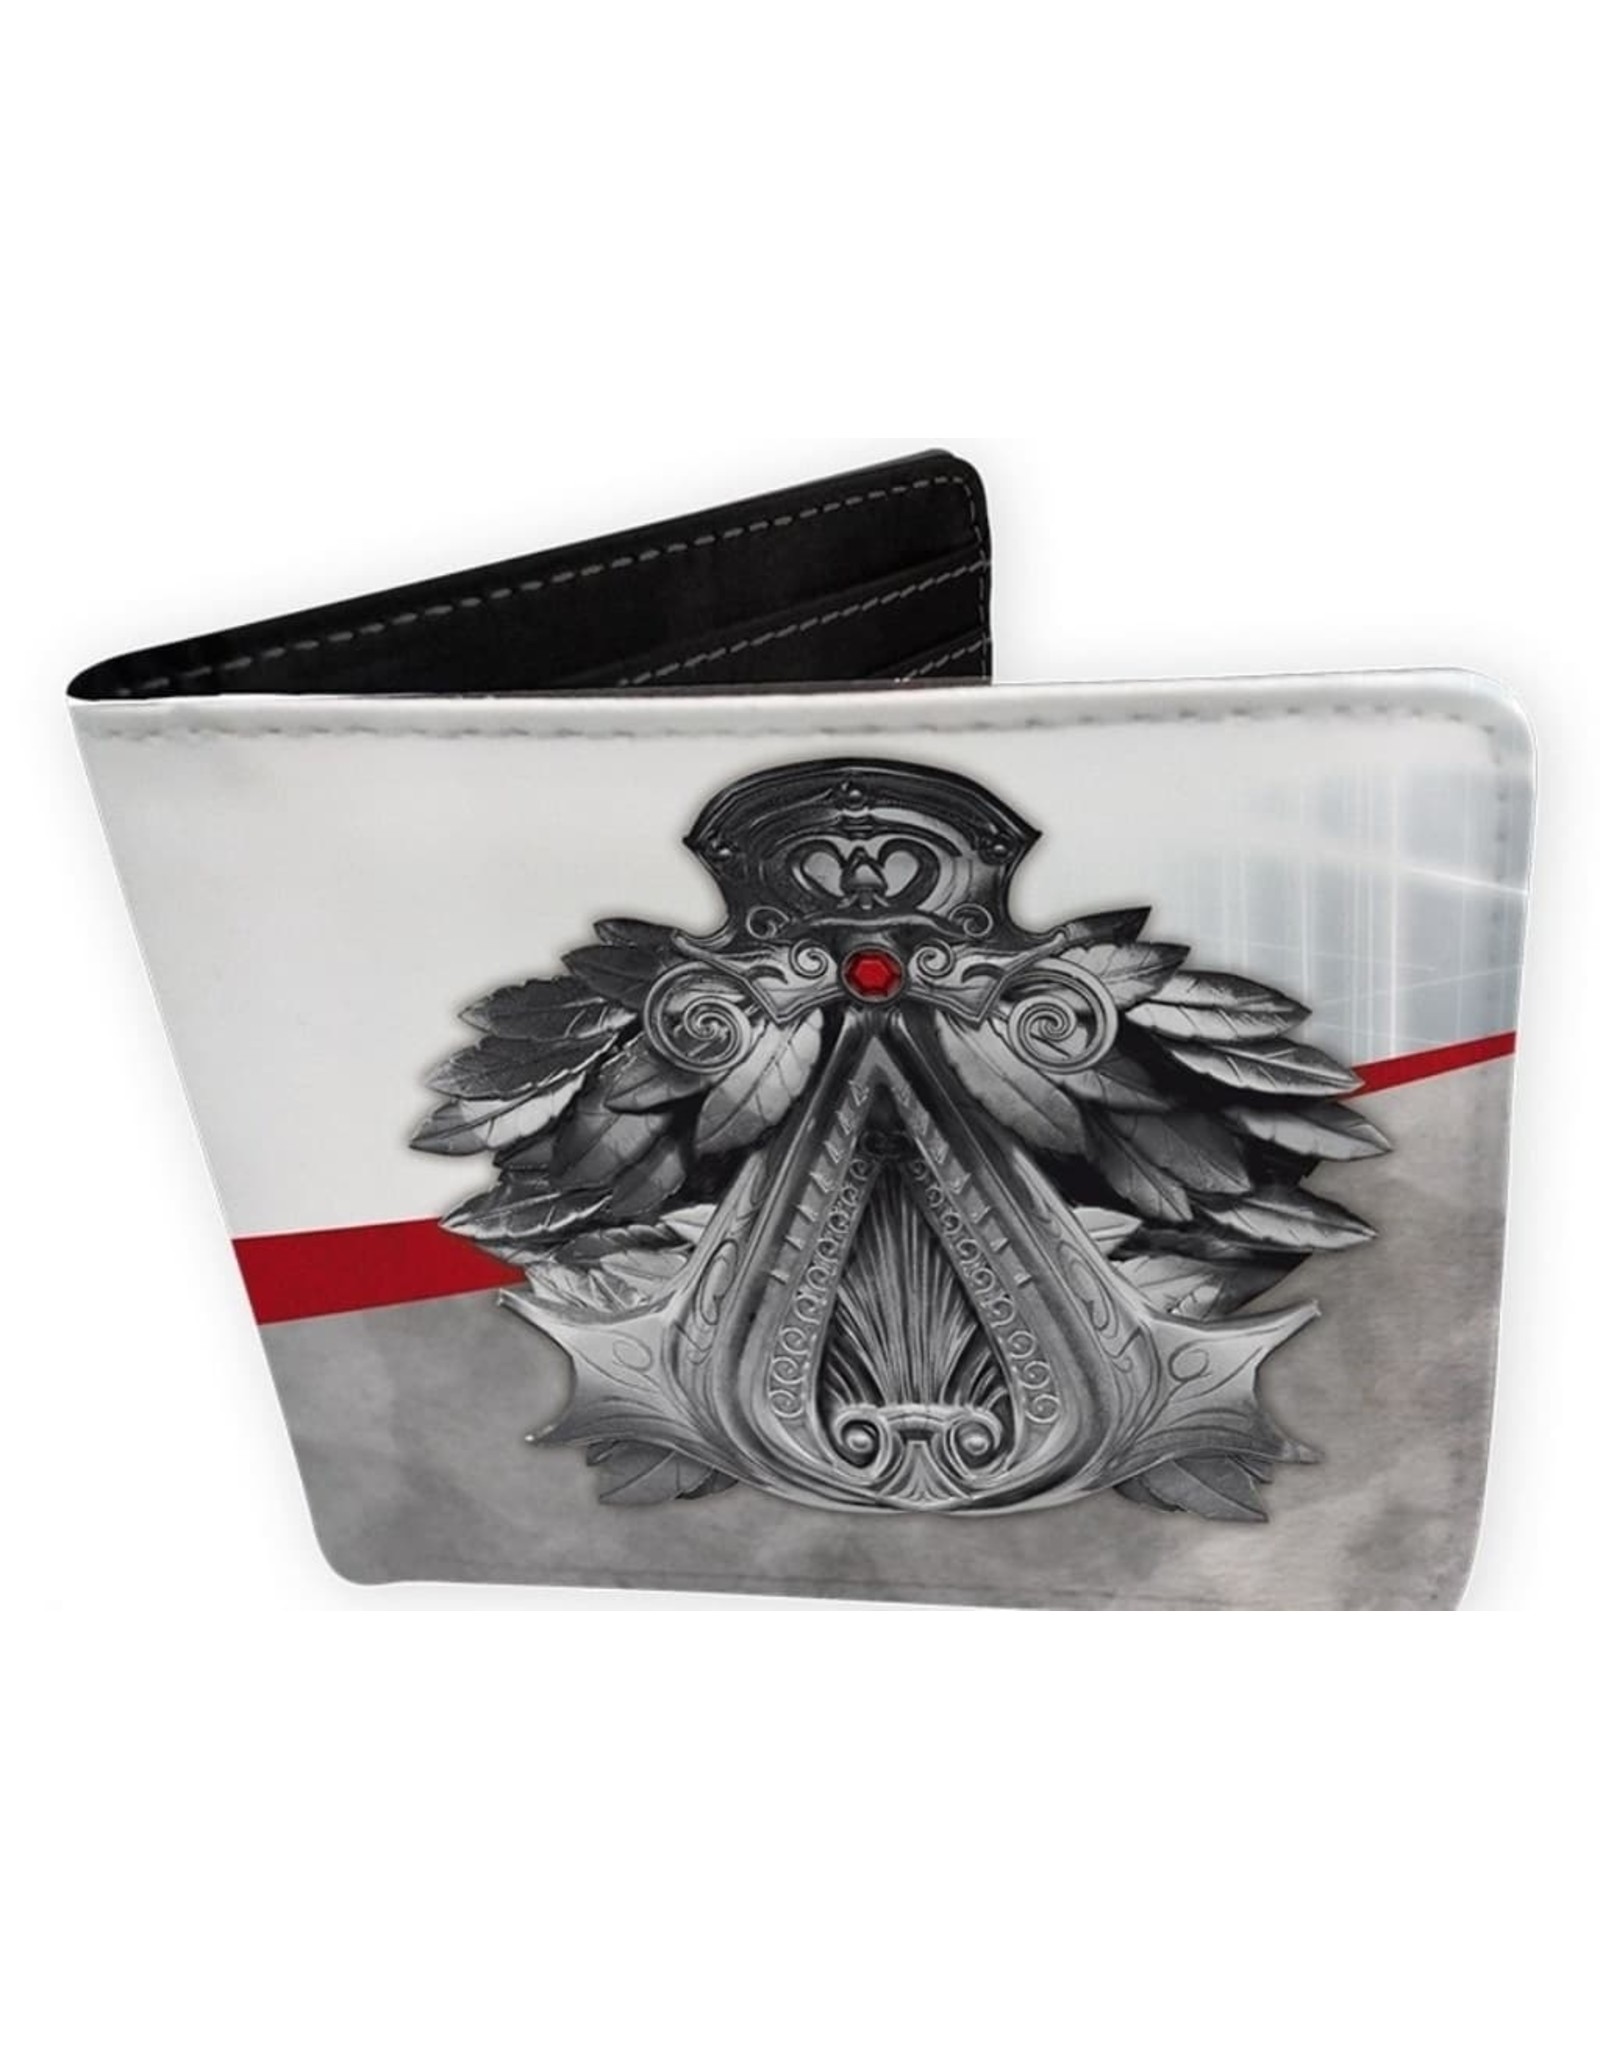 Assassins Creed Merchandise bags - Assassin's Creed Ezio wallet